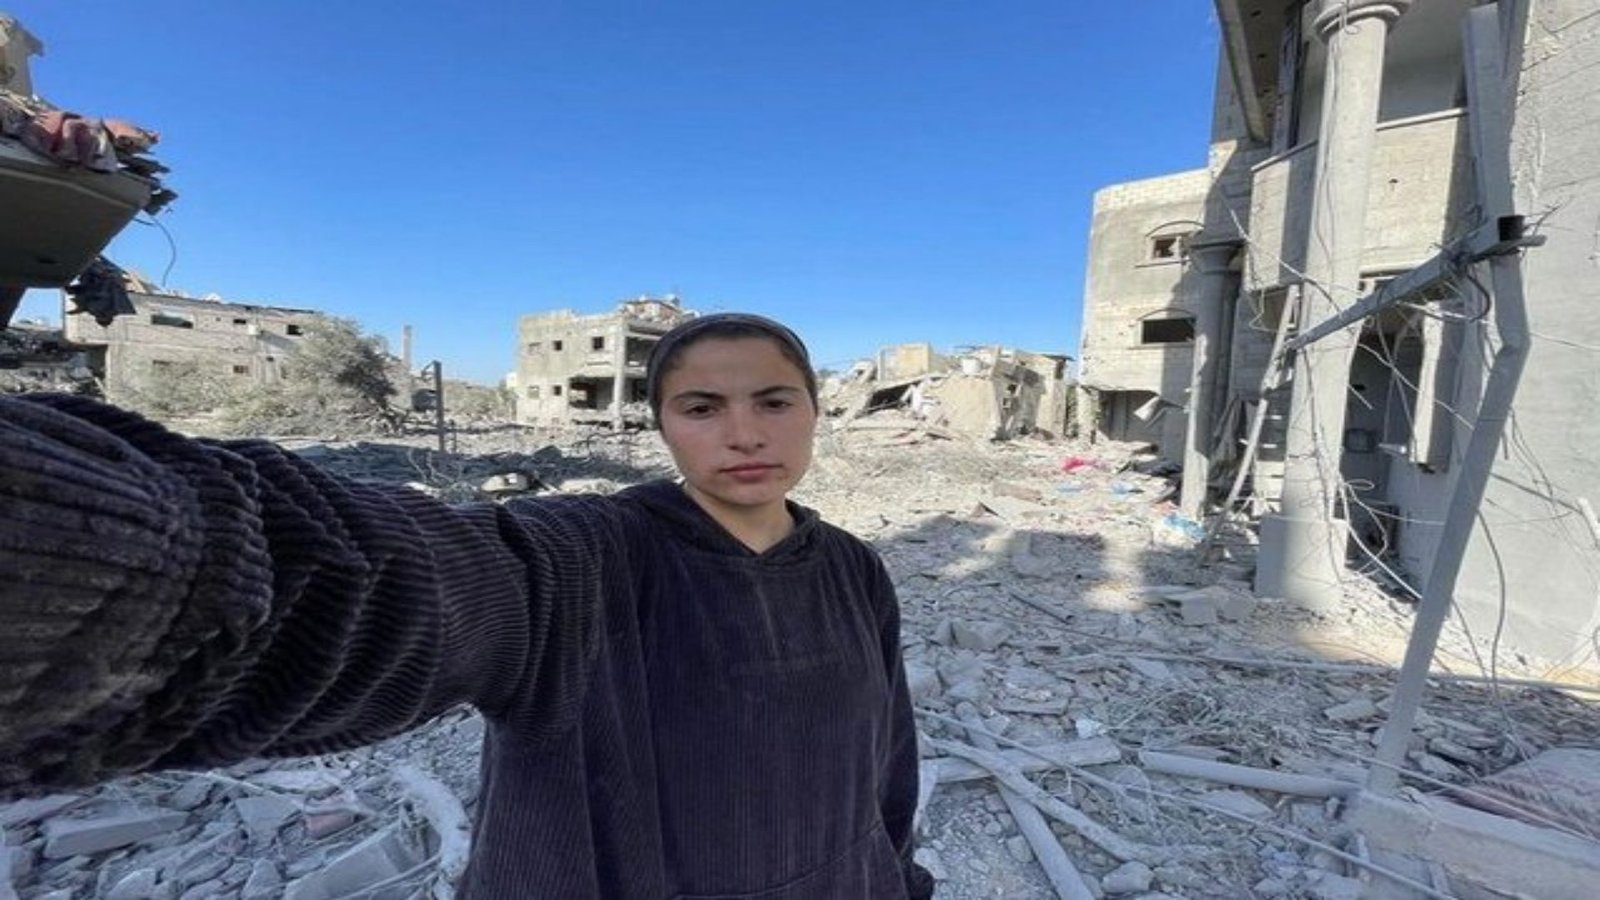 25-year-old Palestinian journalist wins international award for Gaza coverage